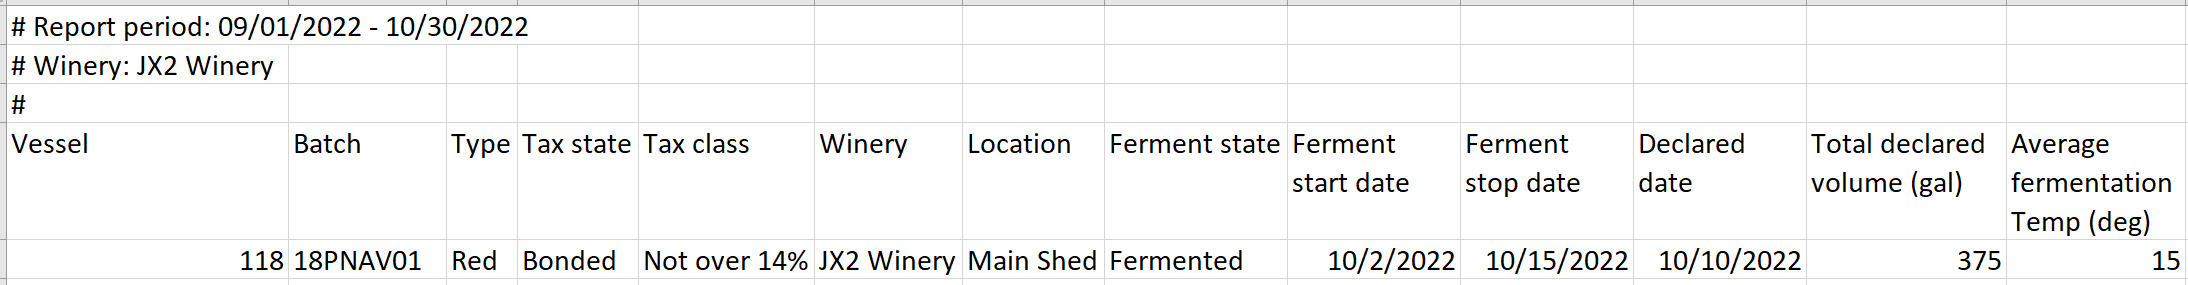 Ferment_Details_Report_-_Example_2.3.png